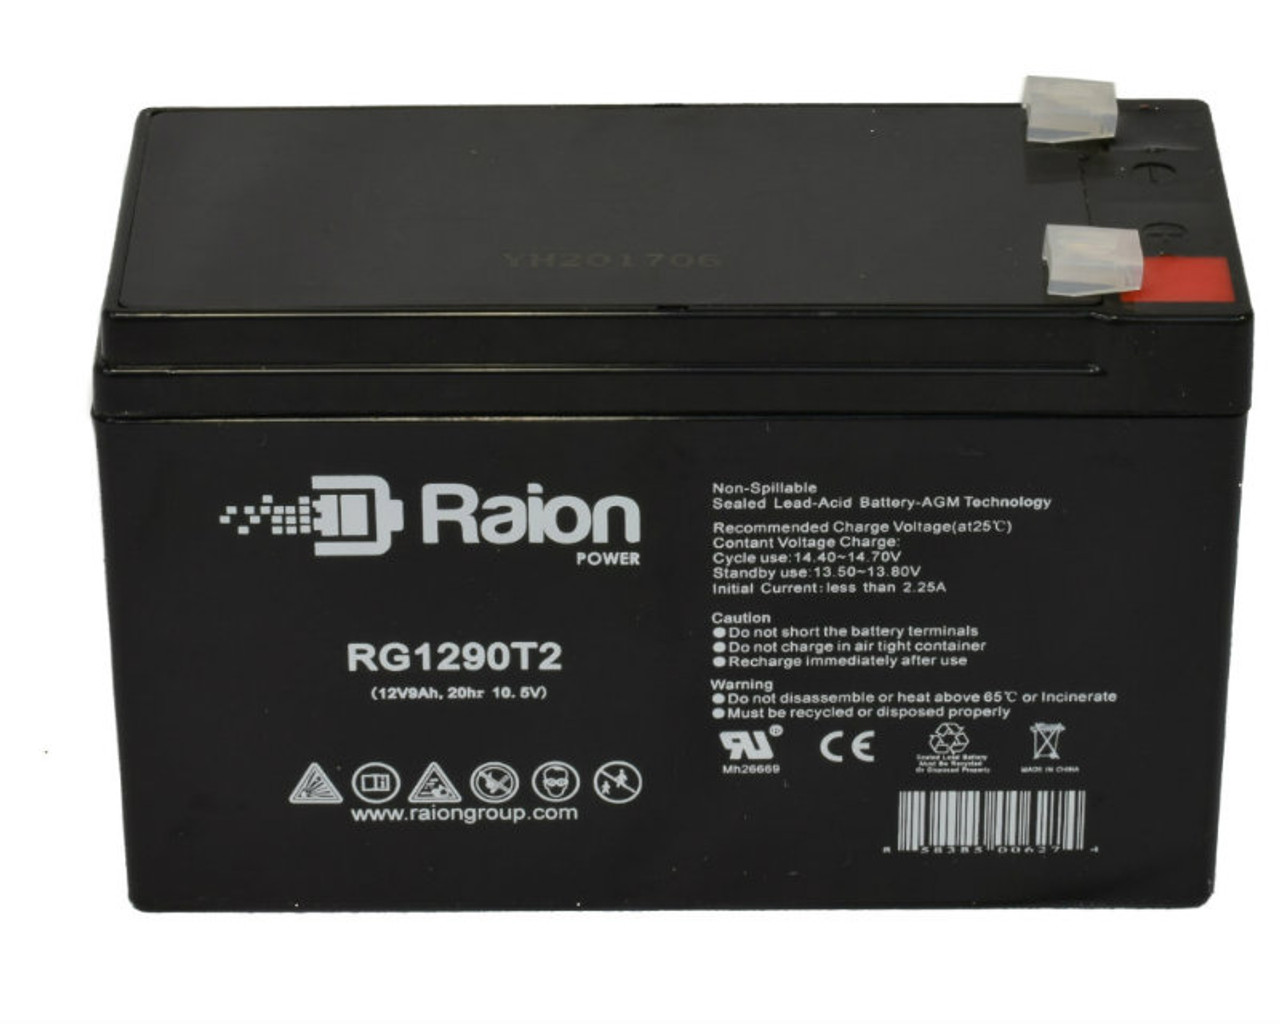 Raion Power RG1290T2 12V 9Ah Lead Acid Battery for Amptek AT12-9